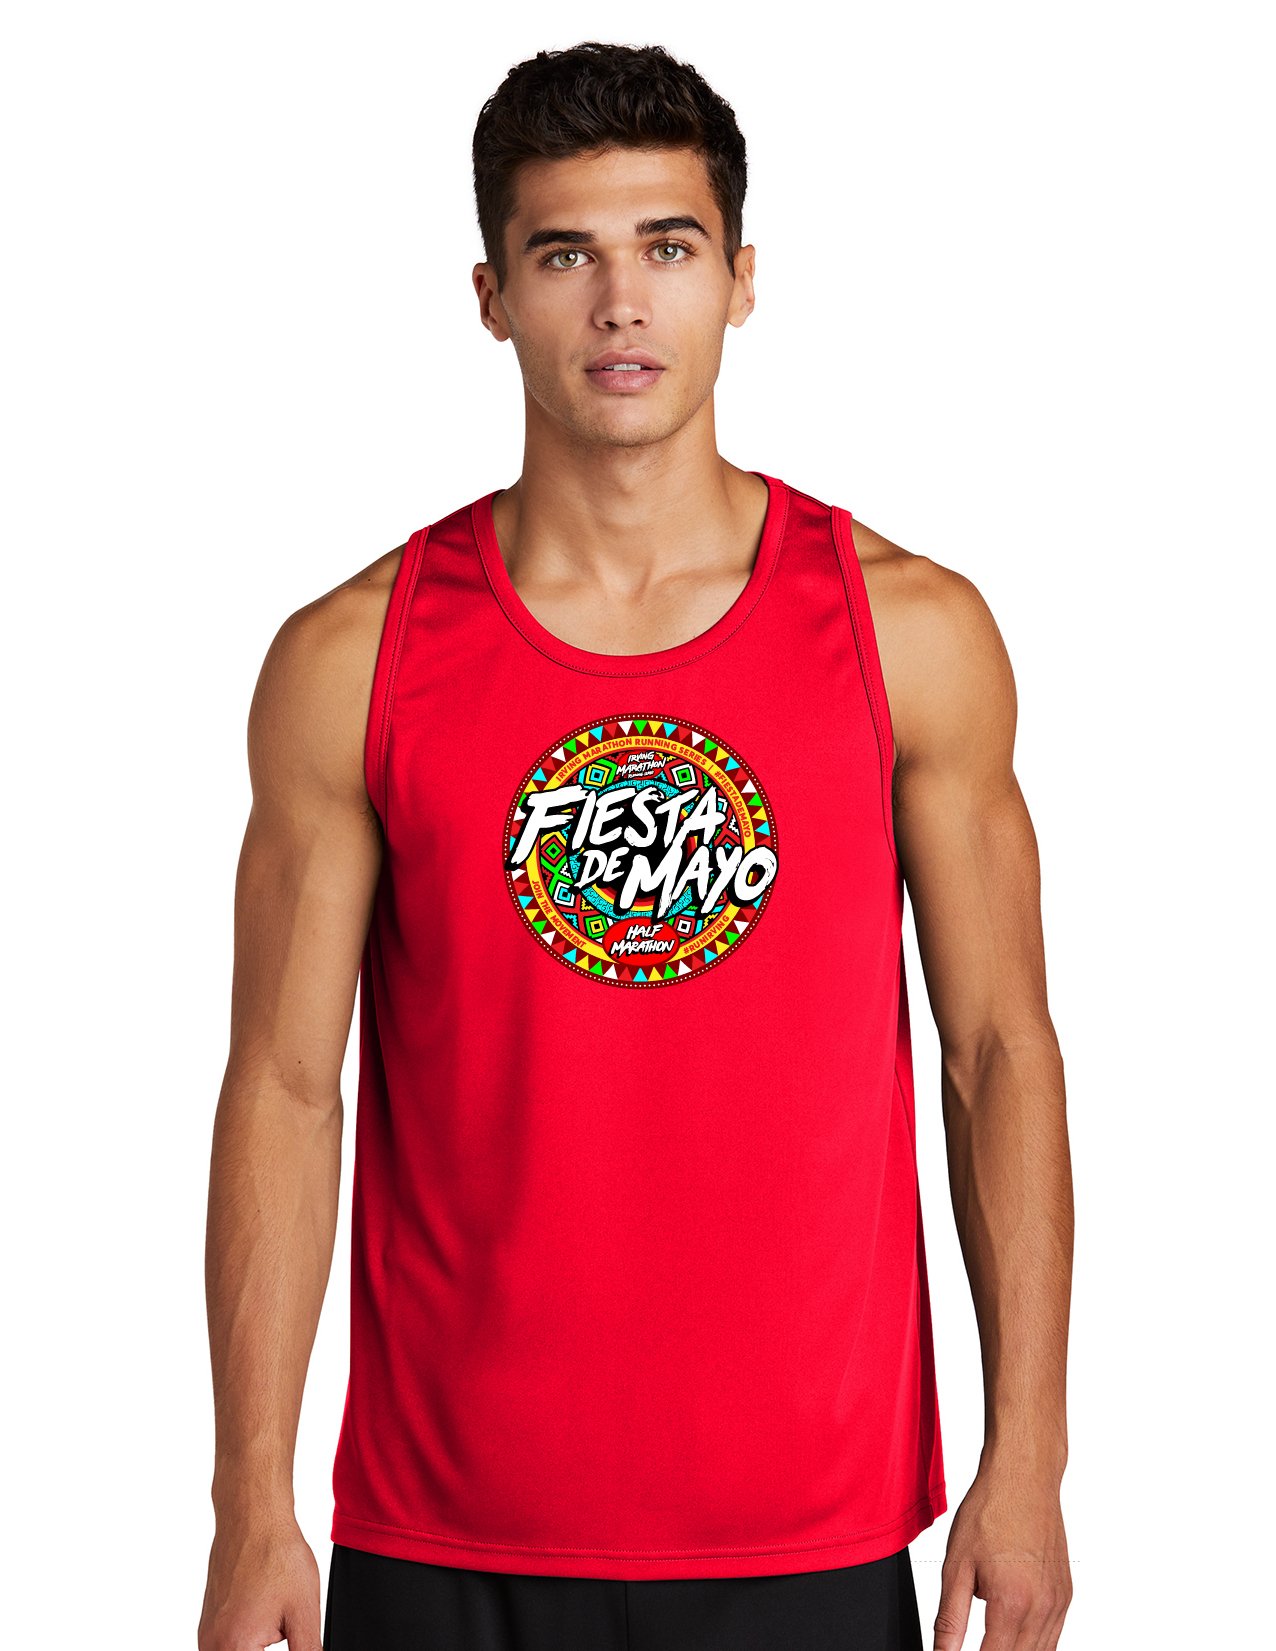 FiestaDeMayoHalfMarathon_2024_Shirt.jpg